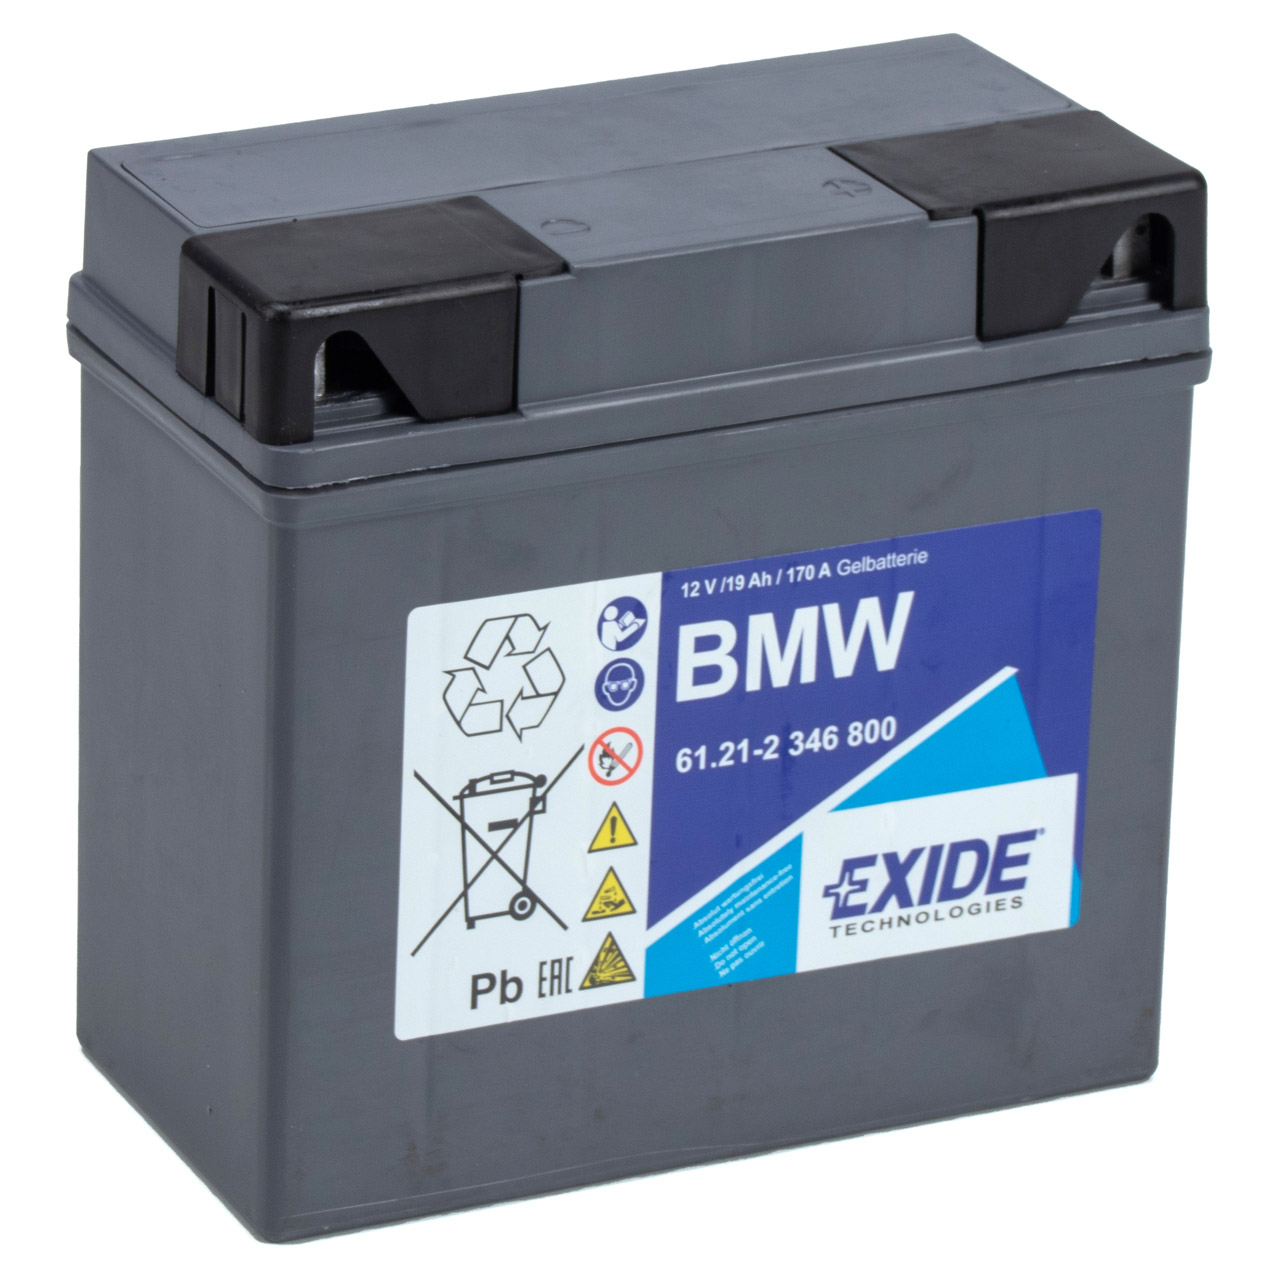 Batterie BMW Exide GEL12-19 - EuroBikes